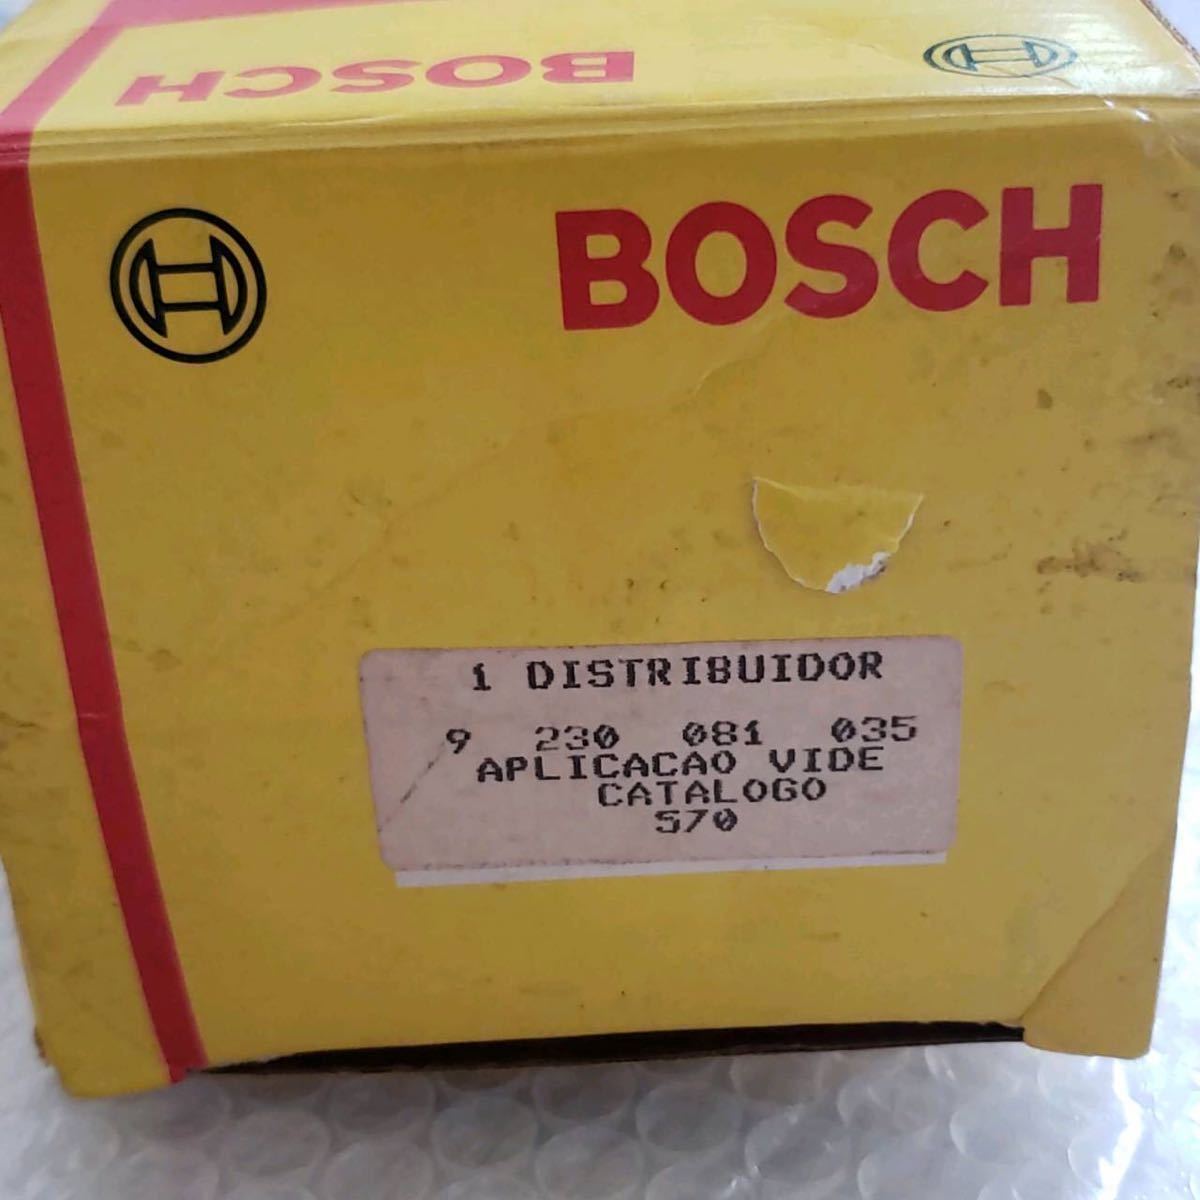  new goods Bosch BOSCH air cooling VW distributor Volkswagen Type 1 2 3 Beetle b radio-controller rear Karmann-ghia distributor 035distributor009